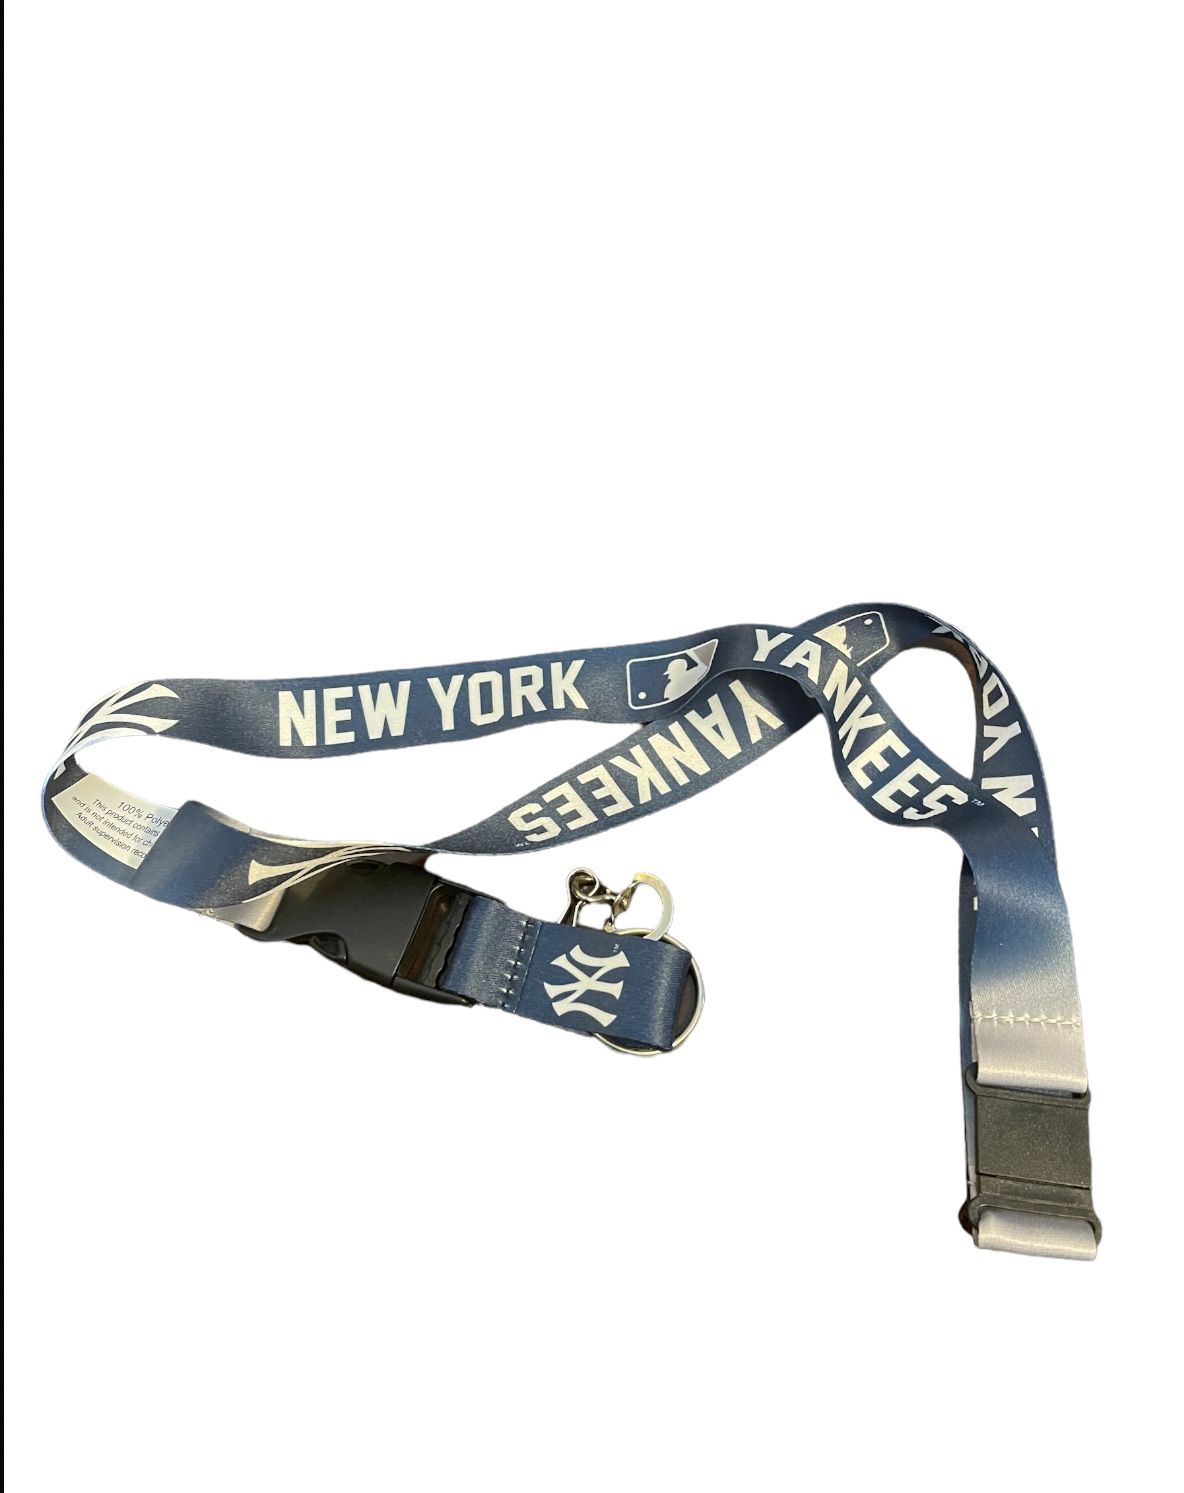 New York Yankees Lanyard with Detachable Buckle [NEW] Key Chain Id Holder Badge